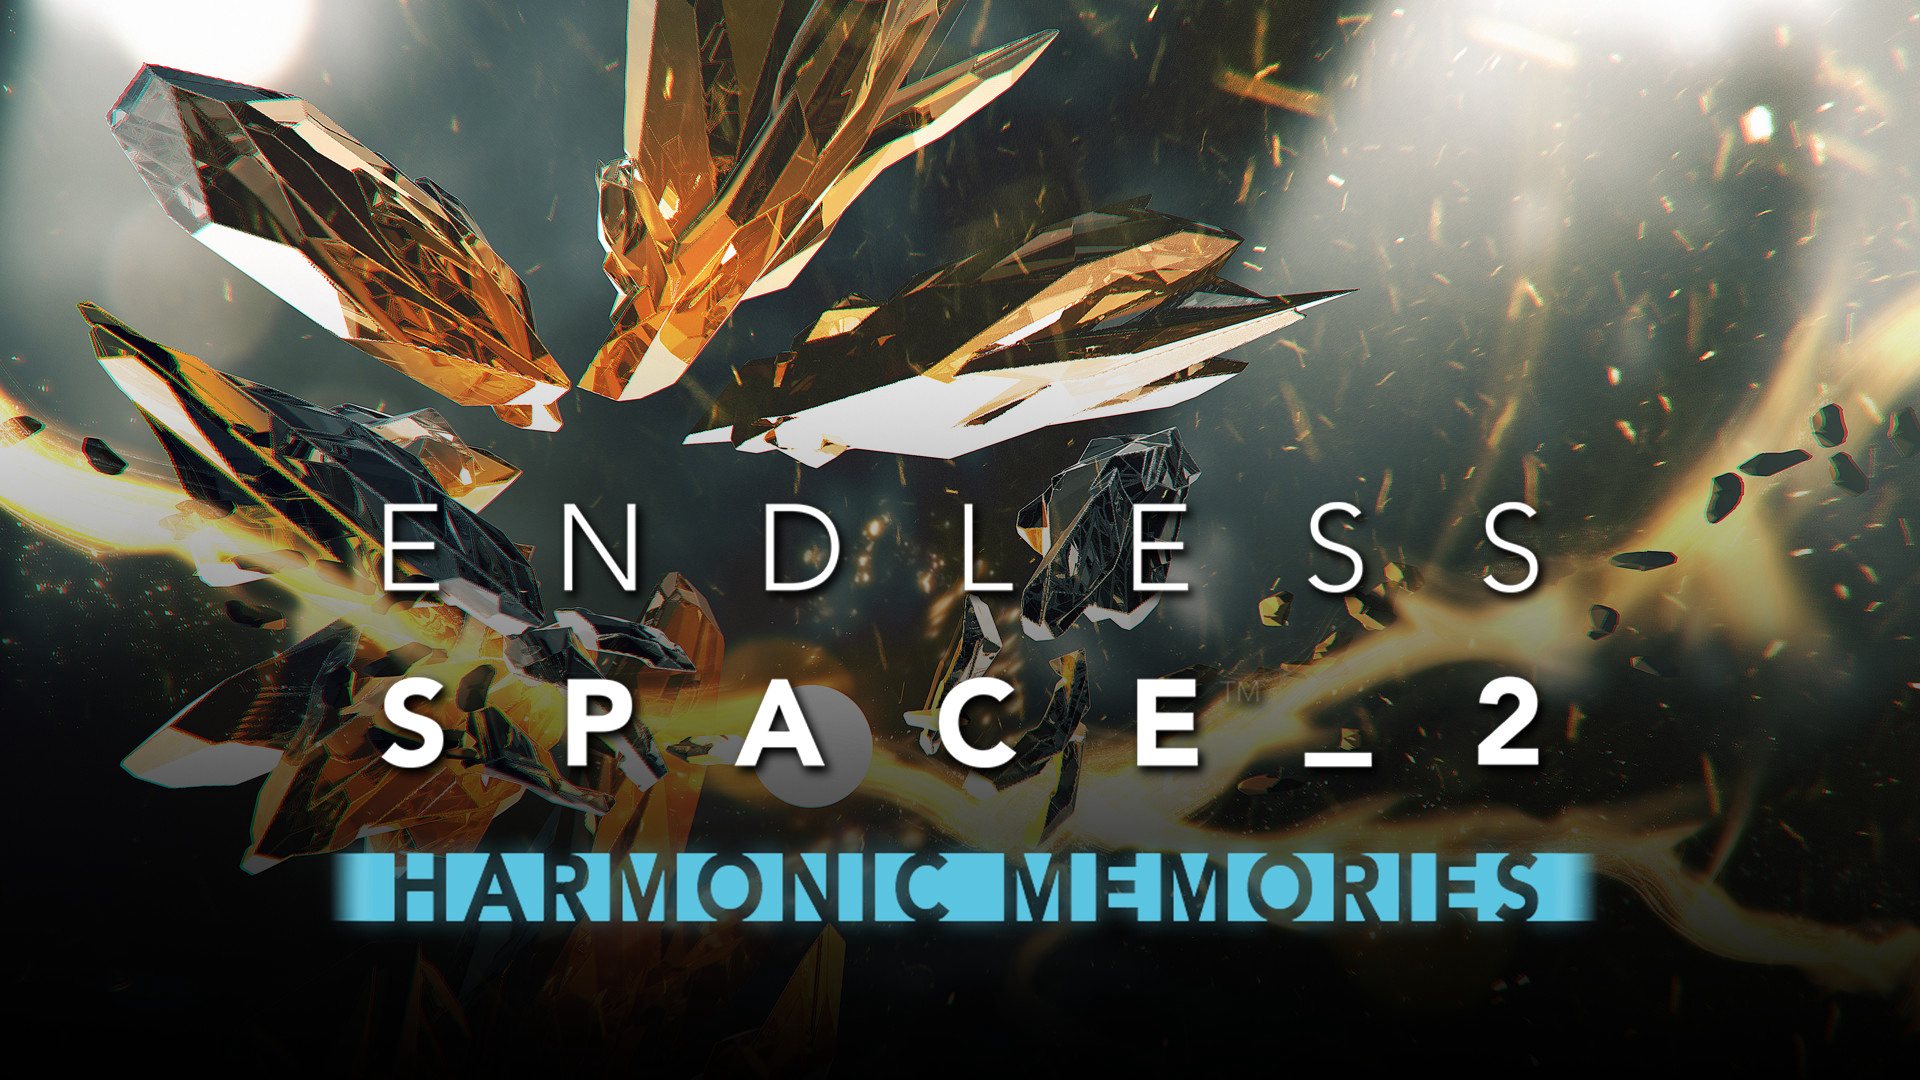 Endless Space 2 - Harmonic Memories DLC Steam CD Key [USD 1.45]